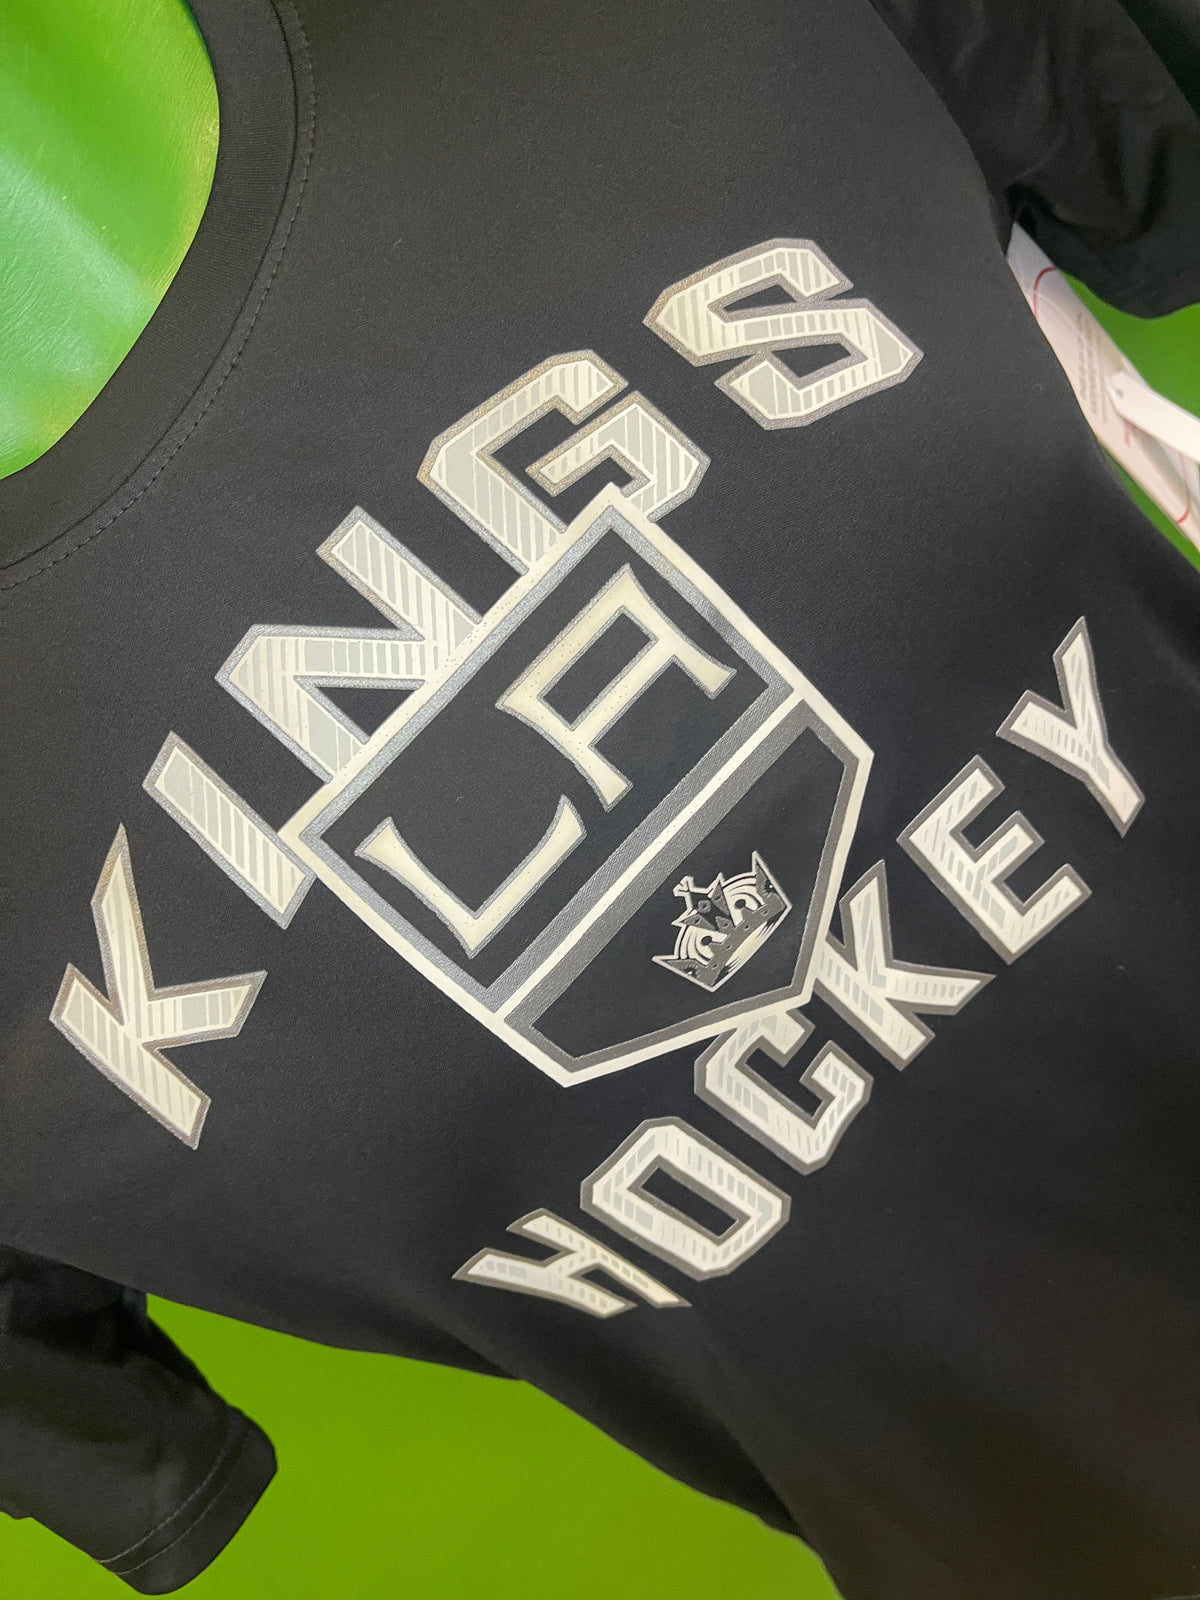 NHL Los Angeles Kings Wicking-Style T-Shirt Youth Medium 10-12 NWT